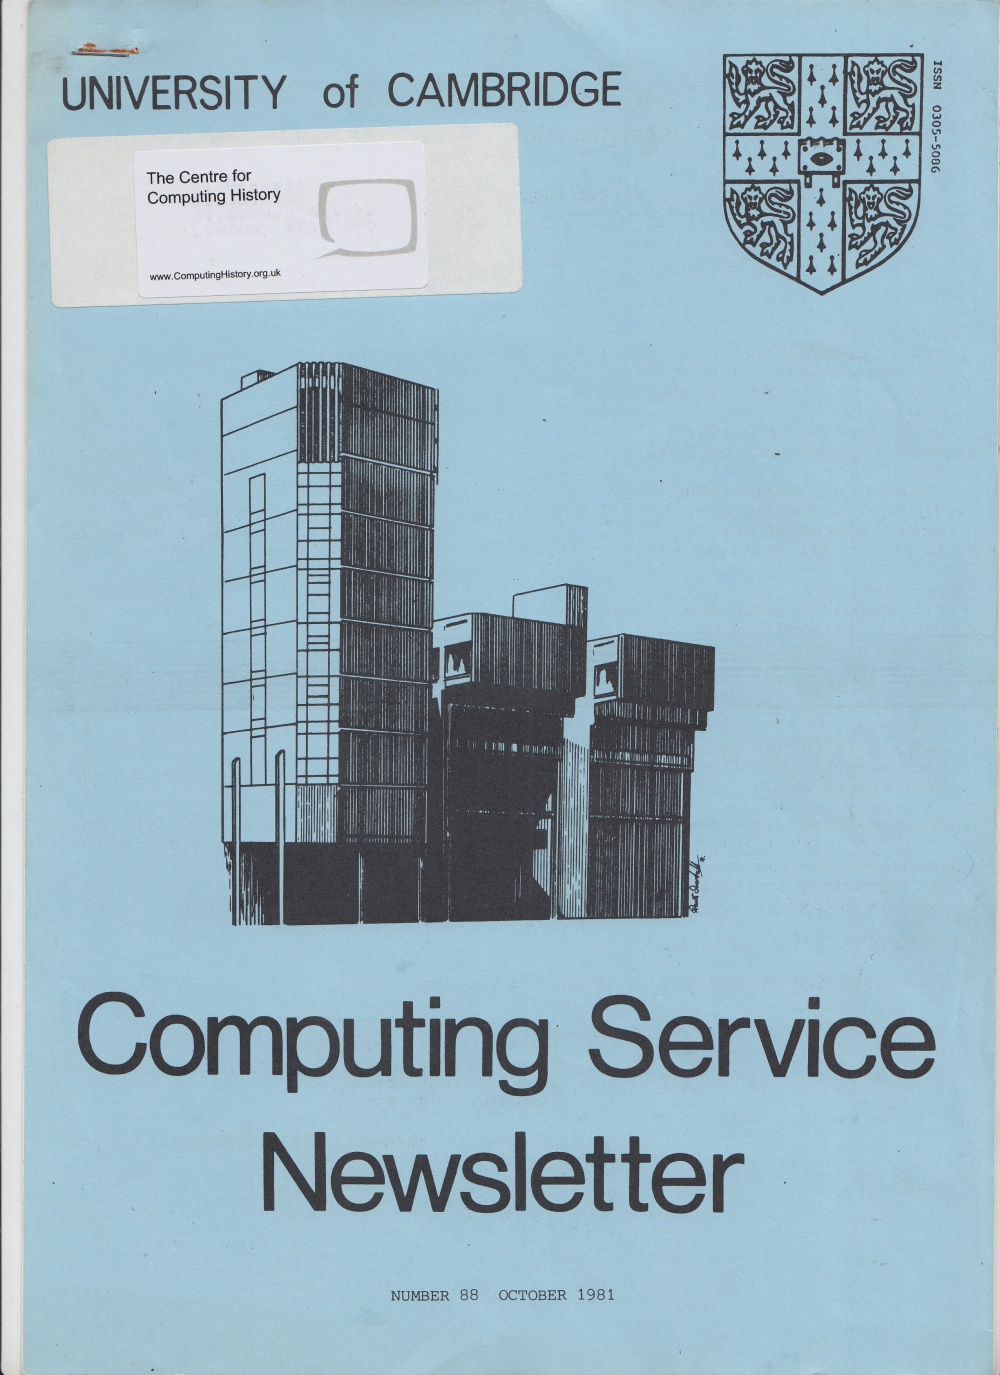 Article: University of Cambridge Computing Service October 1981 Newsletter 88